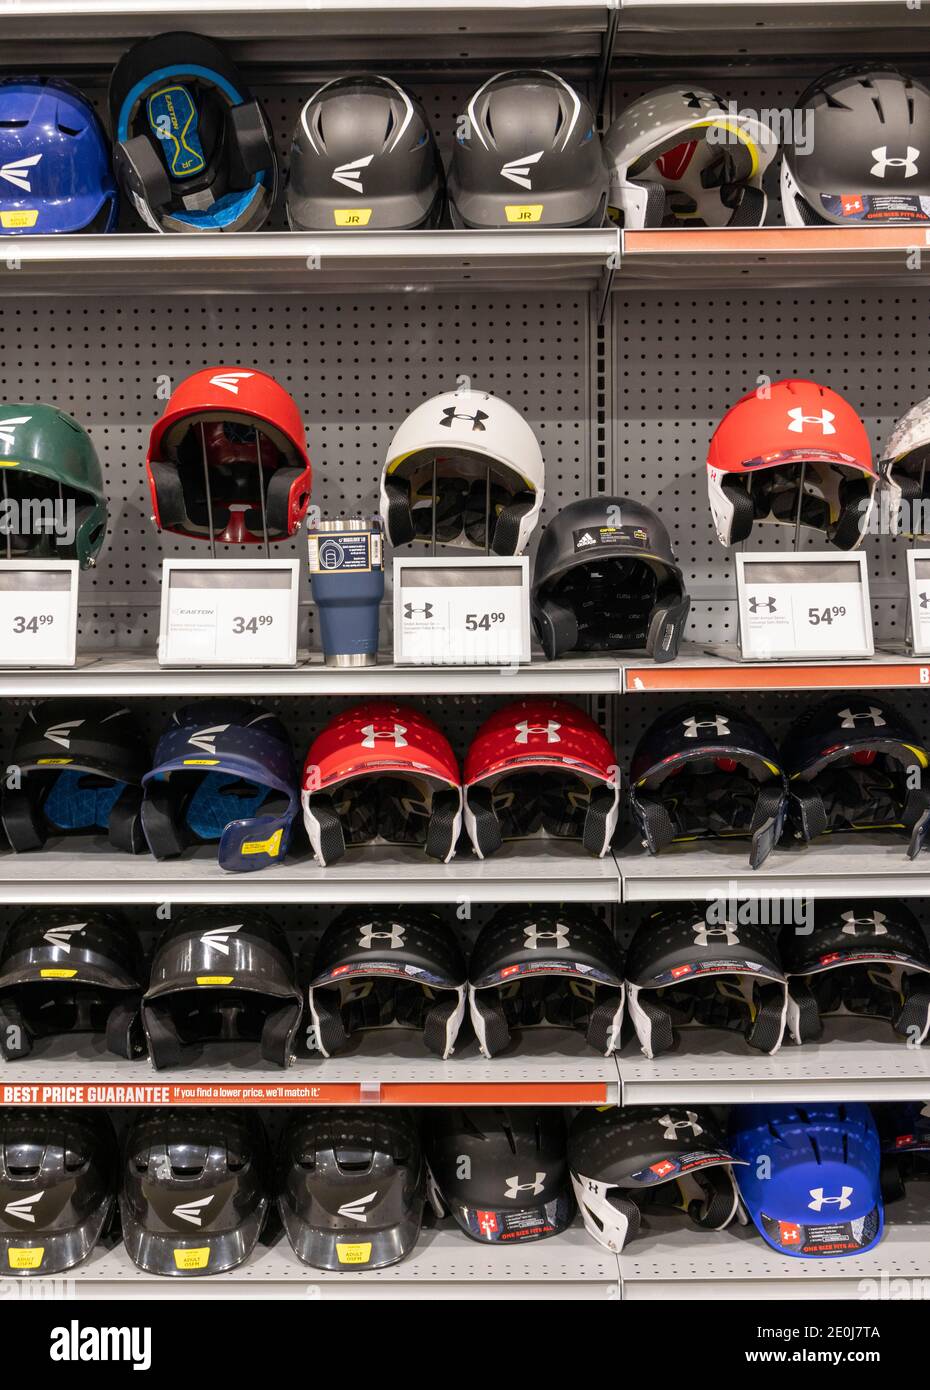 Casques de baseball pour jeunes, Dick's Sporting Goods, Columbia Mall, Kennewick, Washington Sate, États-Unis Banque D'Images